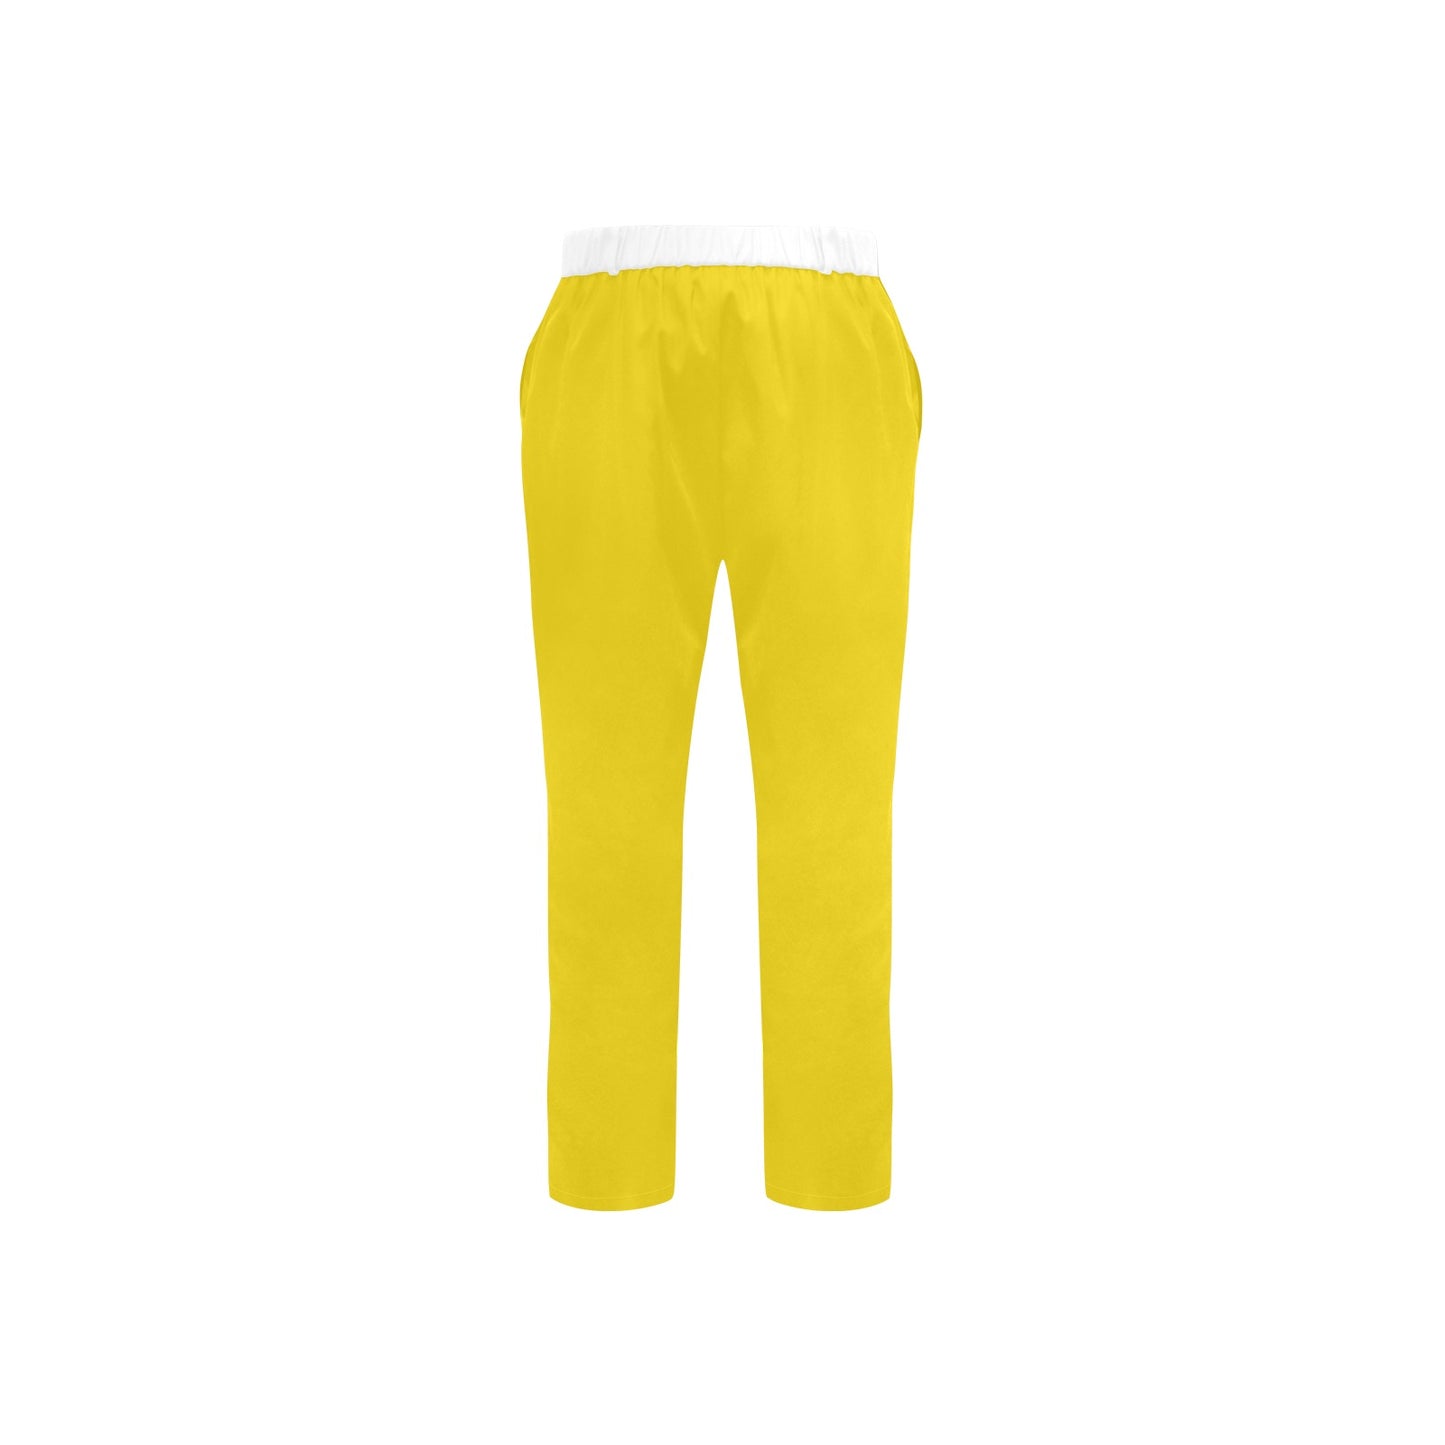 William Michael's Mens Yellow Pants